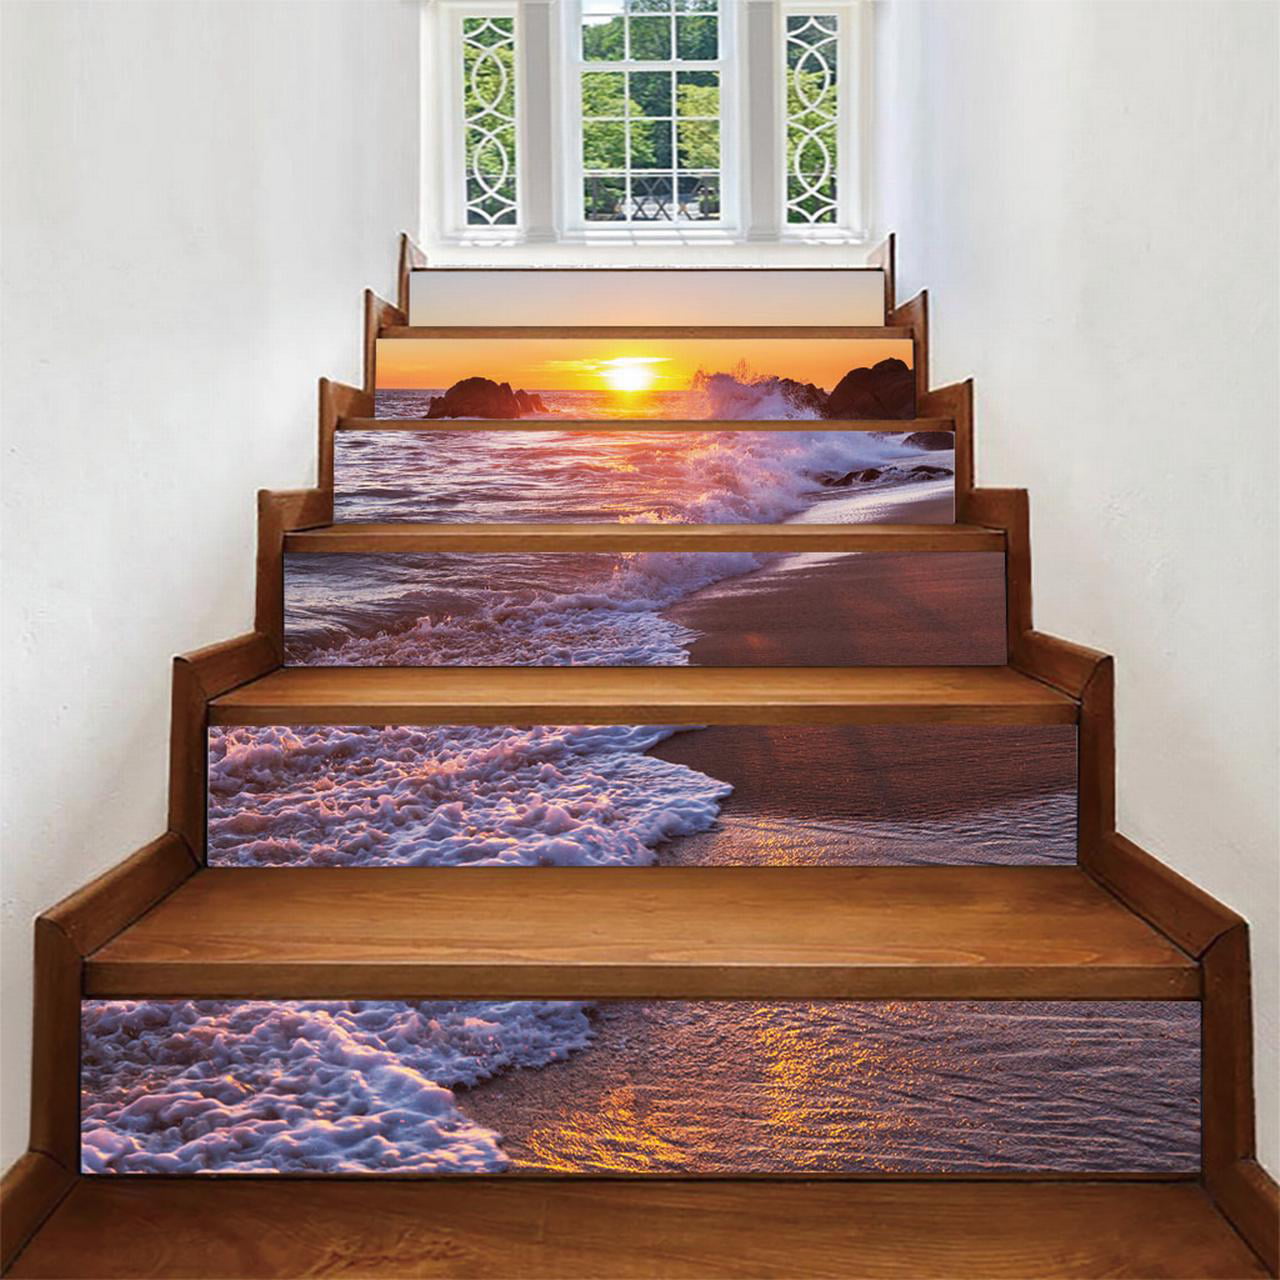 3D Retro Stone Stair Sticker PVC Staircase Riser Decal Self-adhesive Photo Mural 